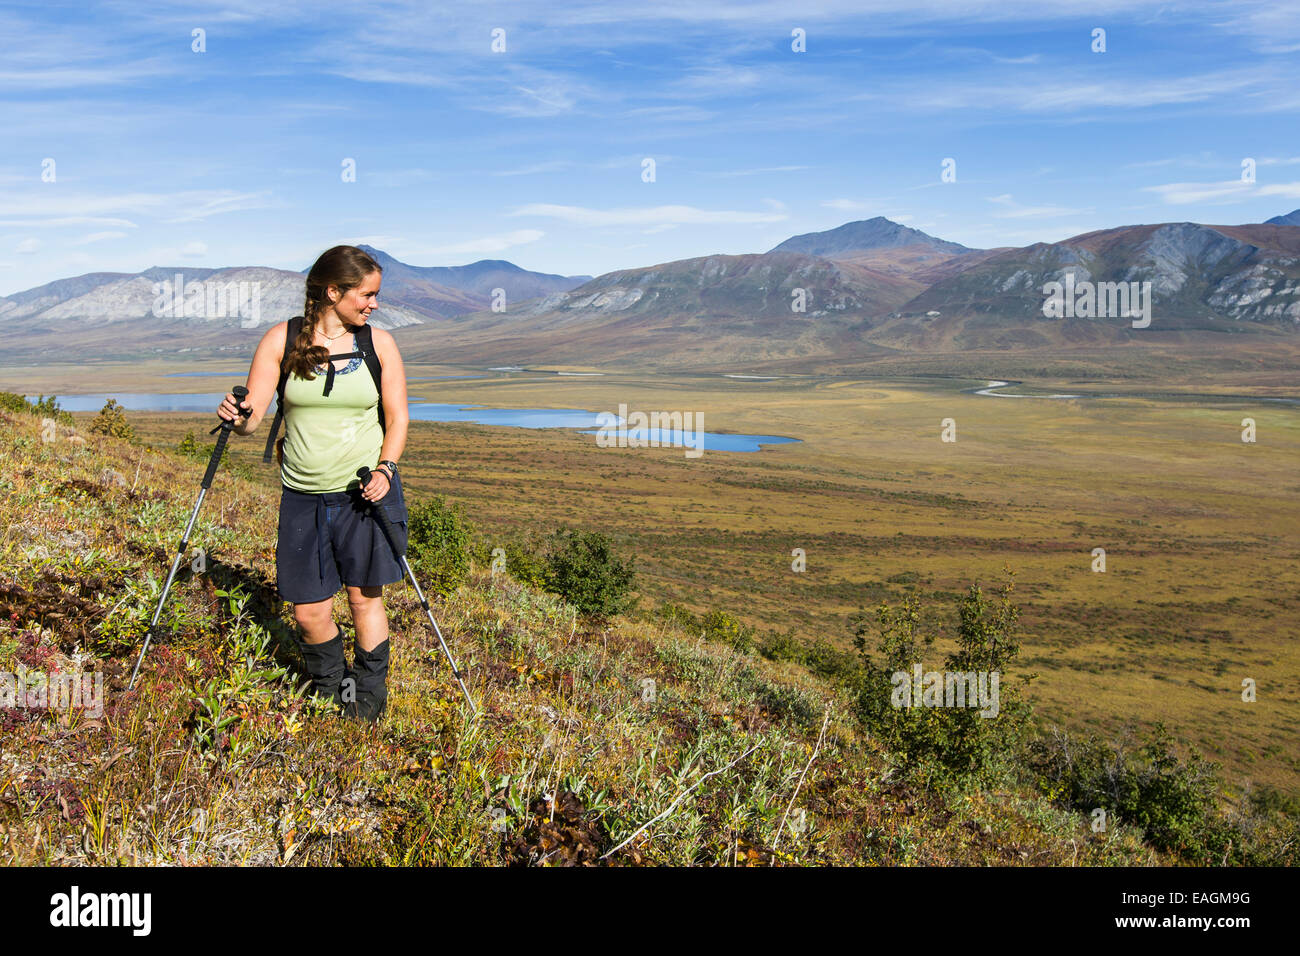 Explore,aventura,Ridge,Excursionista,polacos,Tundra Foto de stock